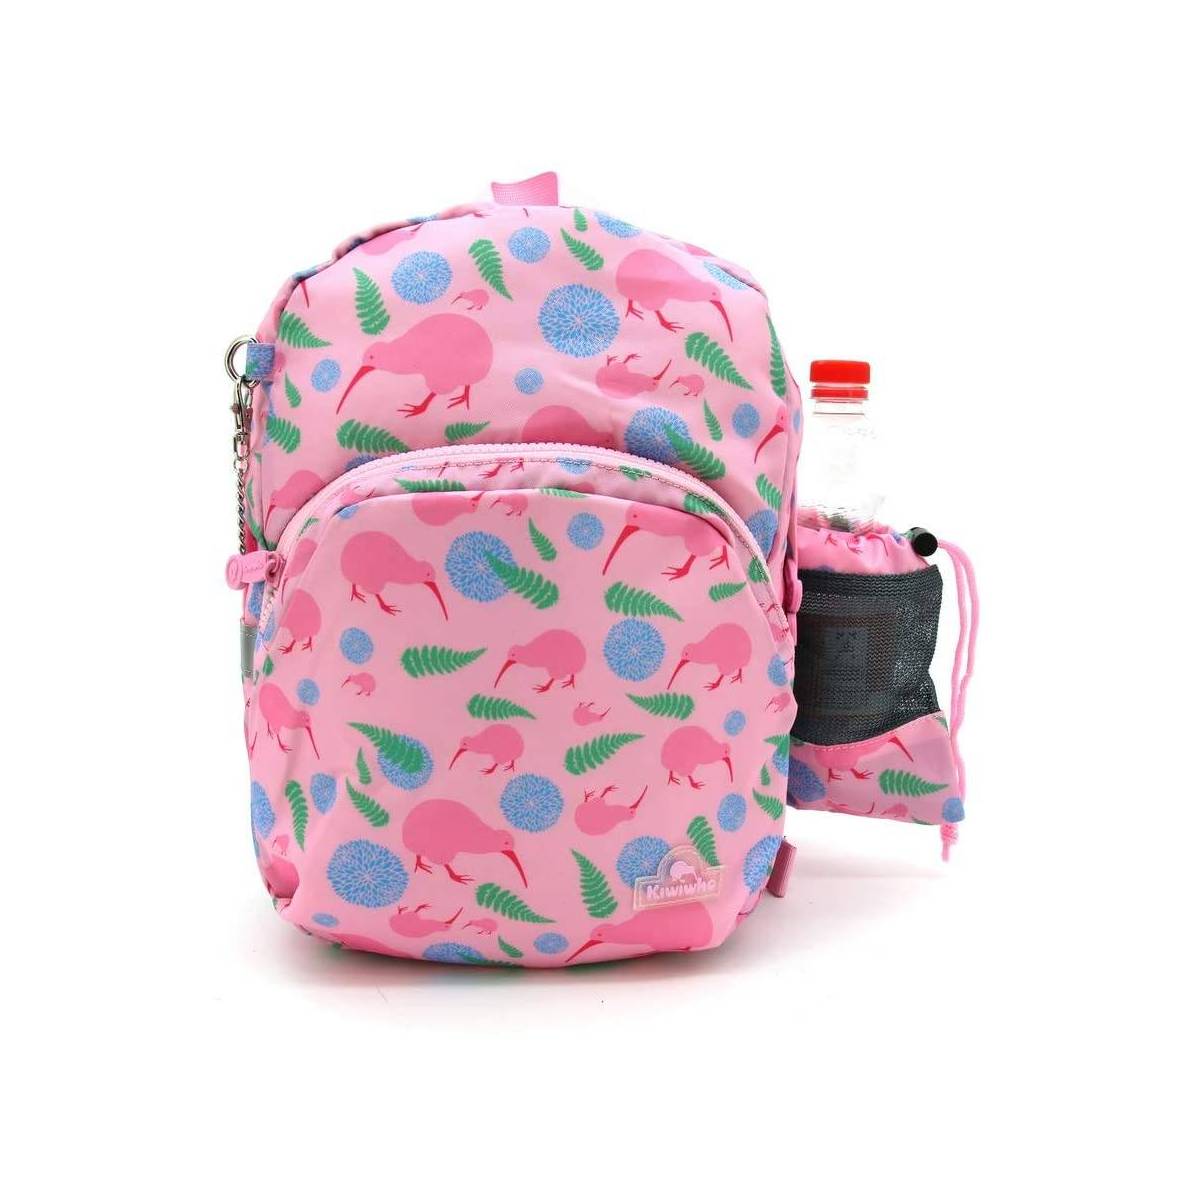 Kiwiwho Child Backpack Pink